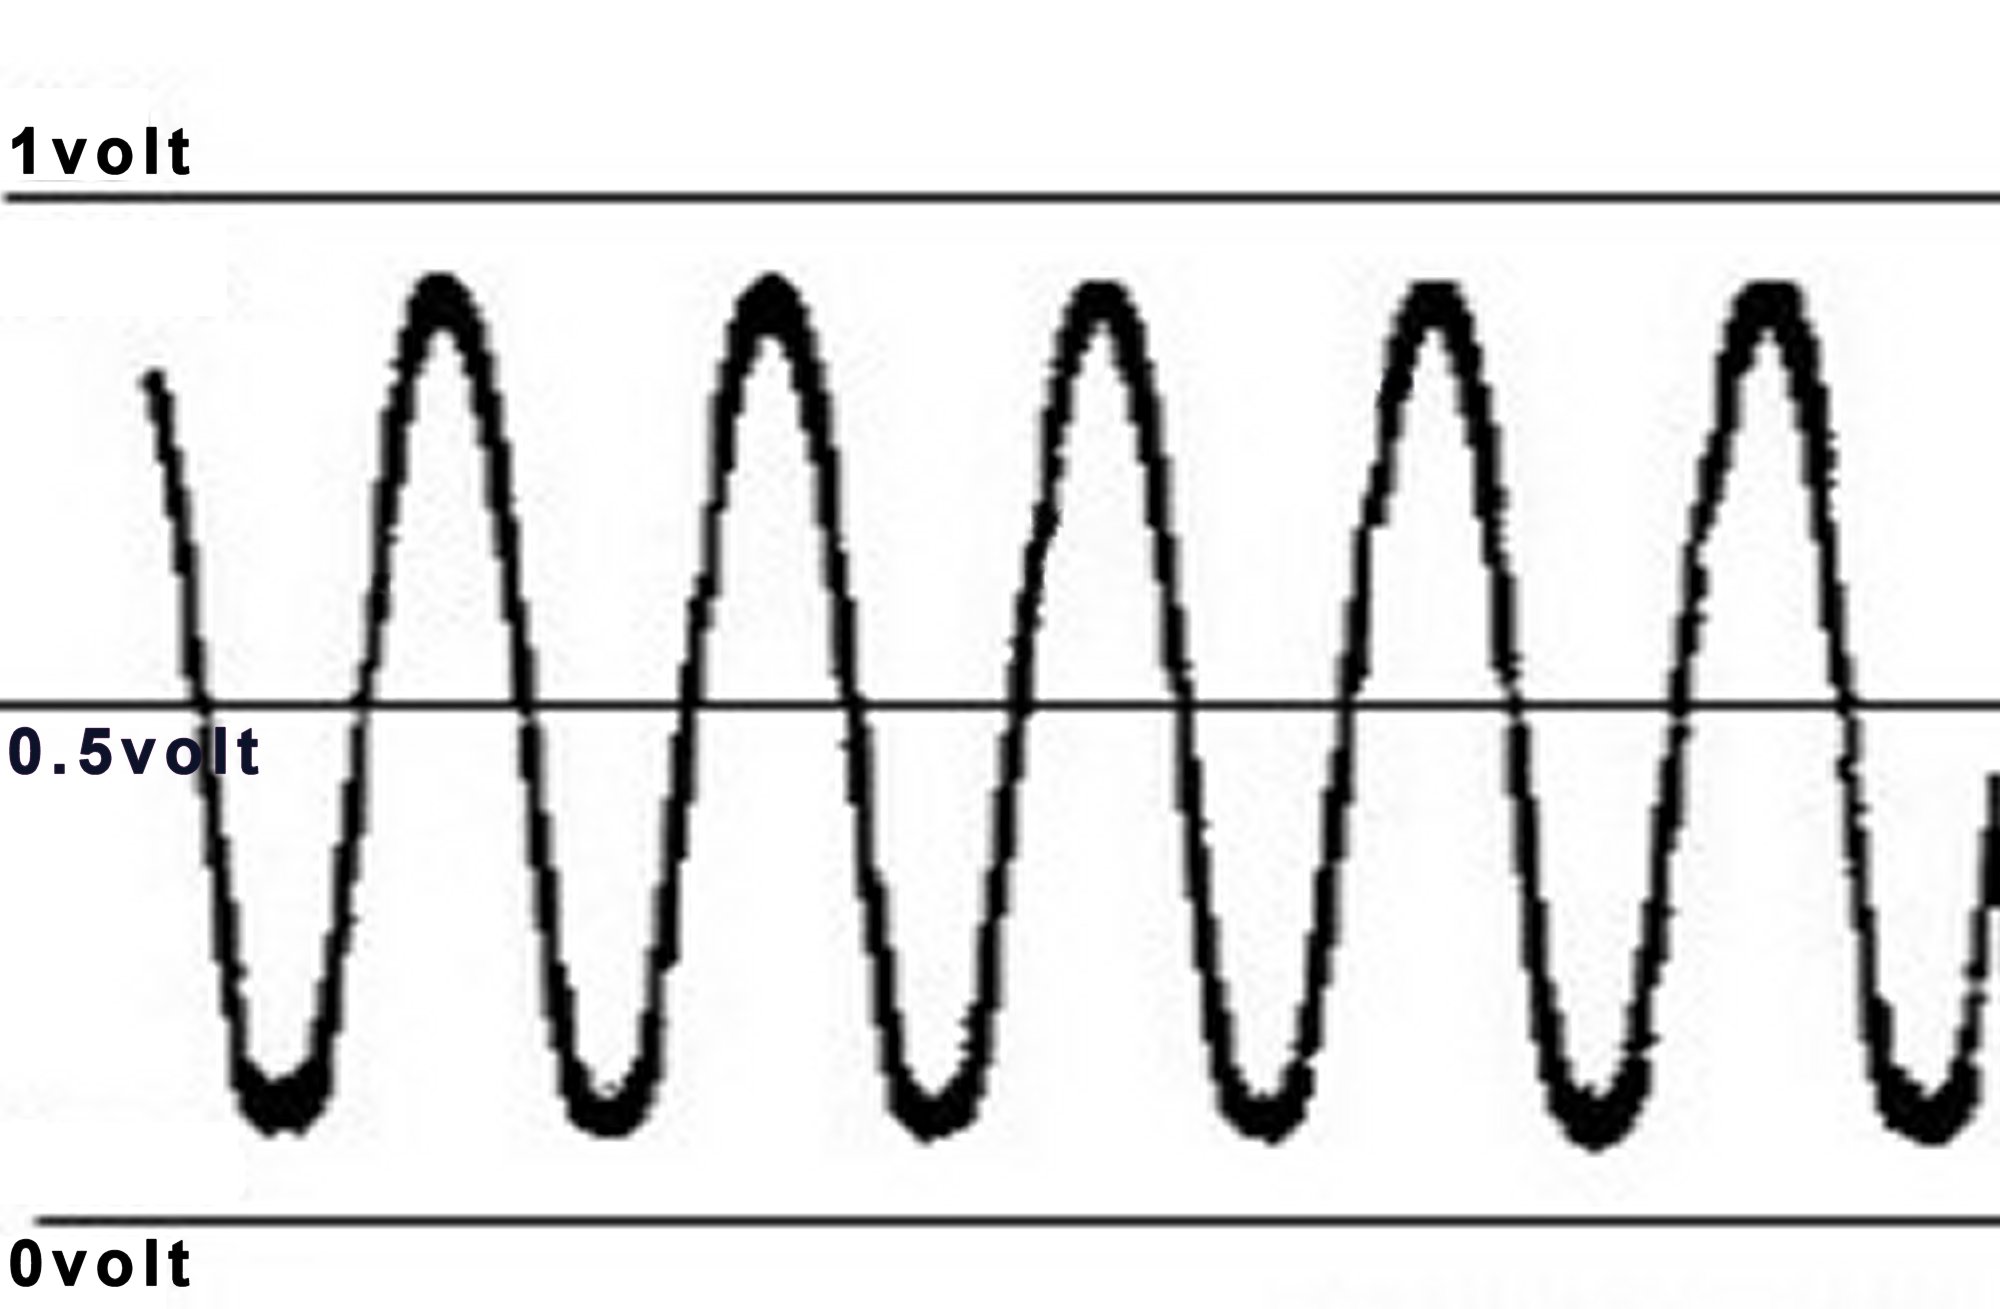 narrow_band_voltage_graph.jpg